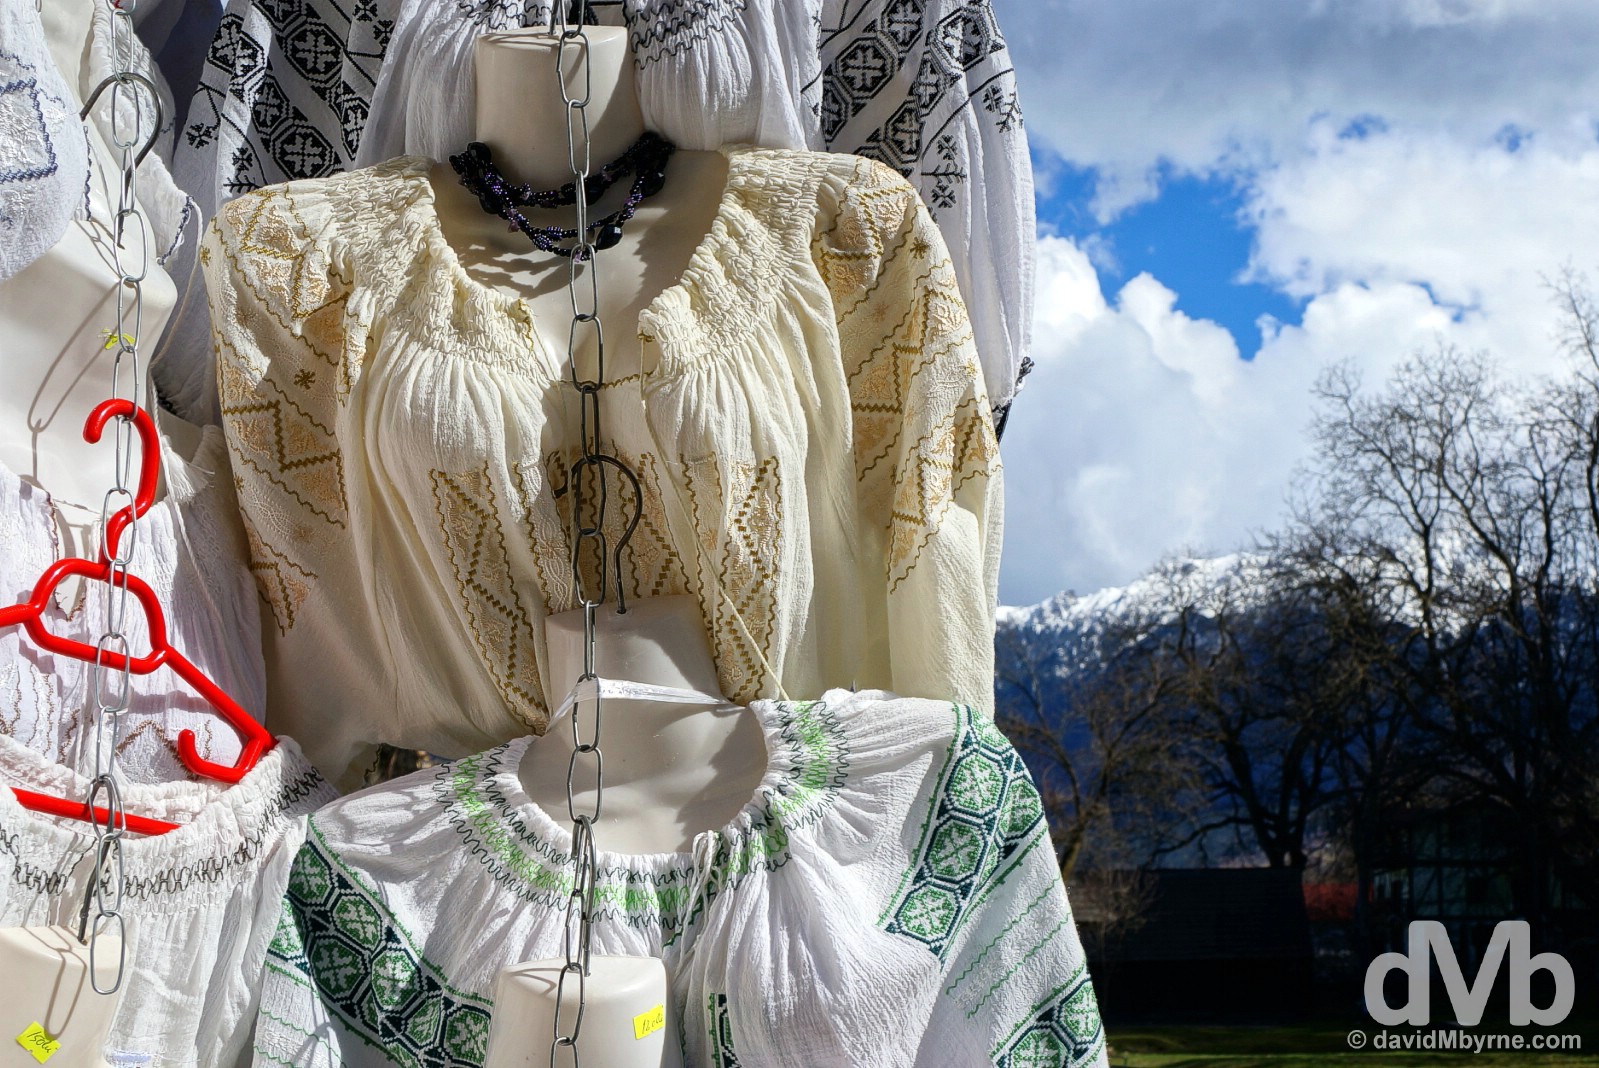 Traditional clothing for sale in Bran, Transylvania, Romania. April 2, 2015.